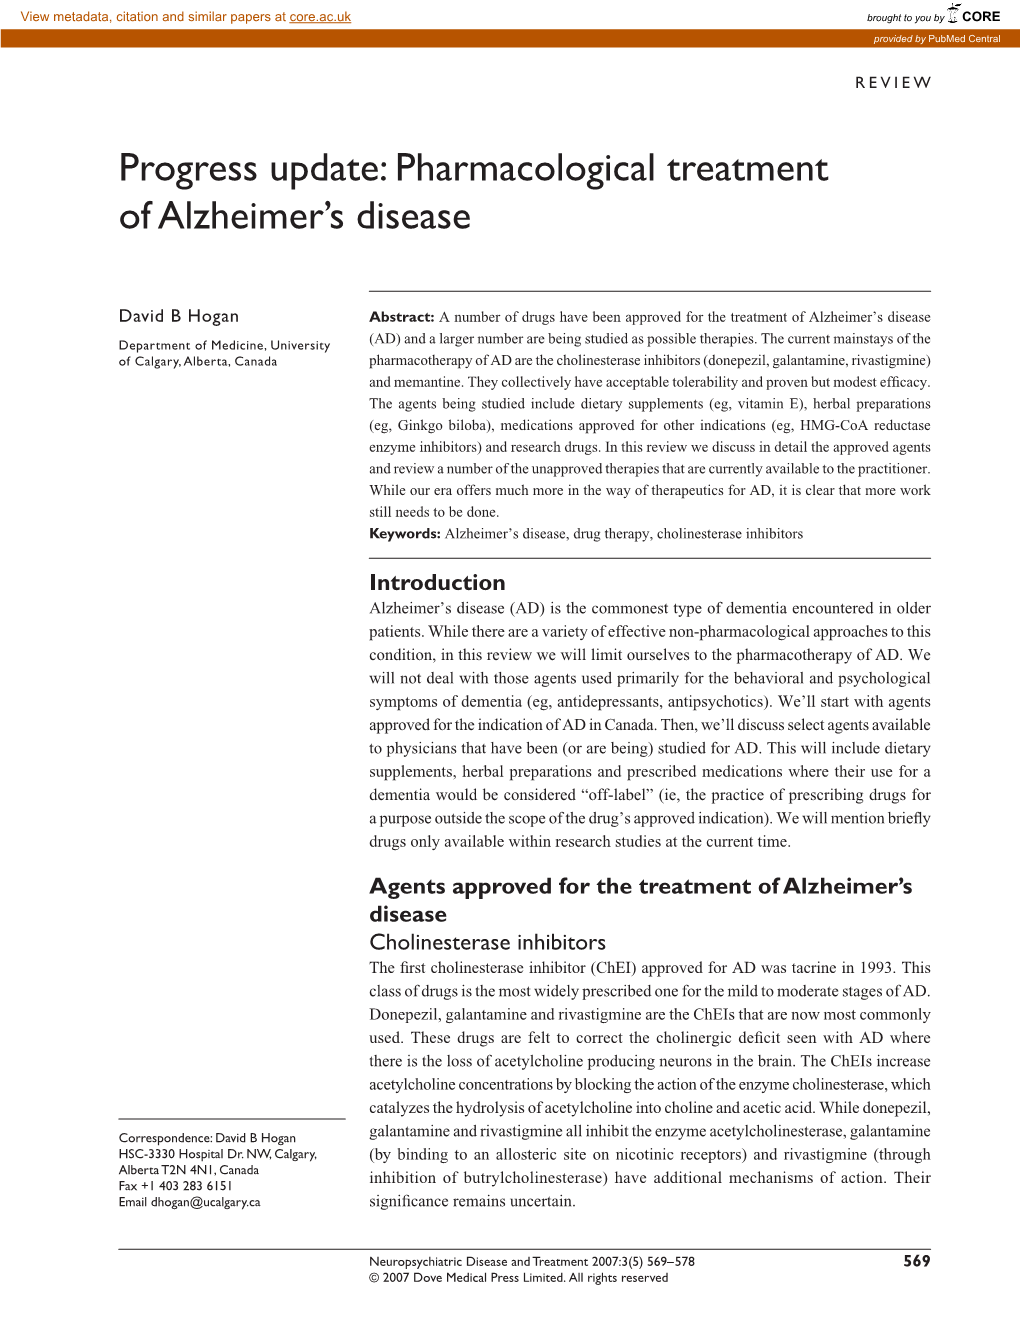 Progress Update: Pharmacological Treatment of Alzheimer's Disease